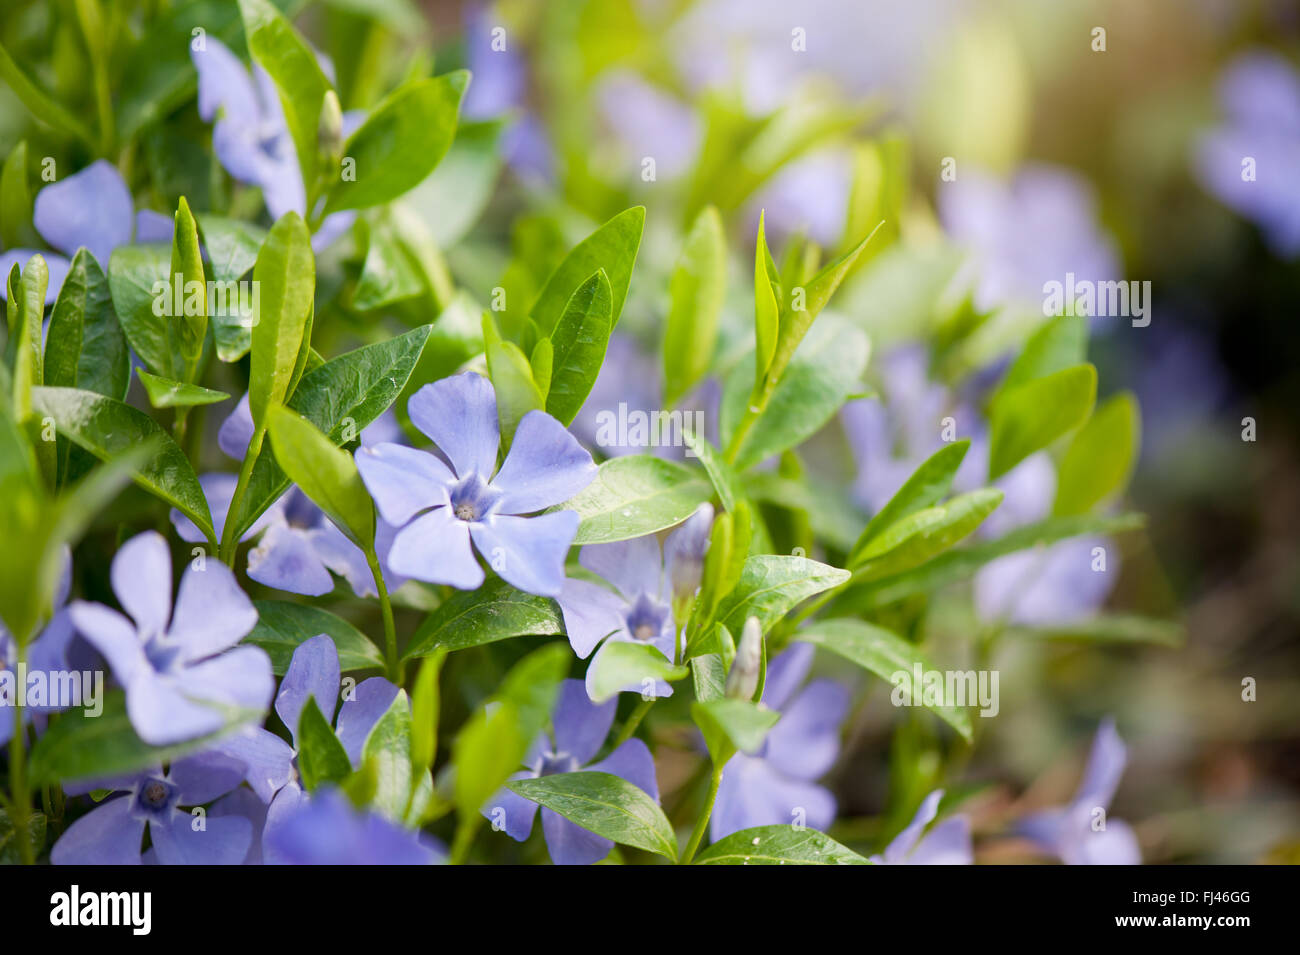 Vinca Blumen Makro, Lobelia Familie Immergrün oder Myrte hell blühenden Pflanzen mit lebendigen Grün Blätter Klumpen Stockfoto